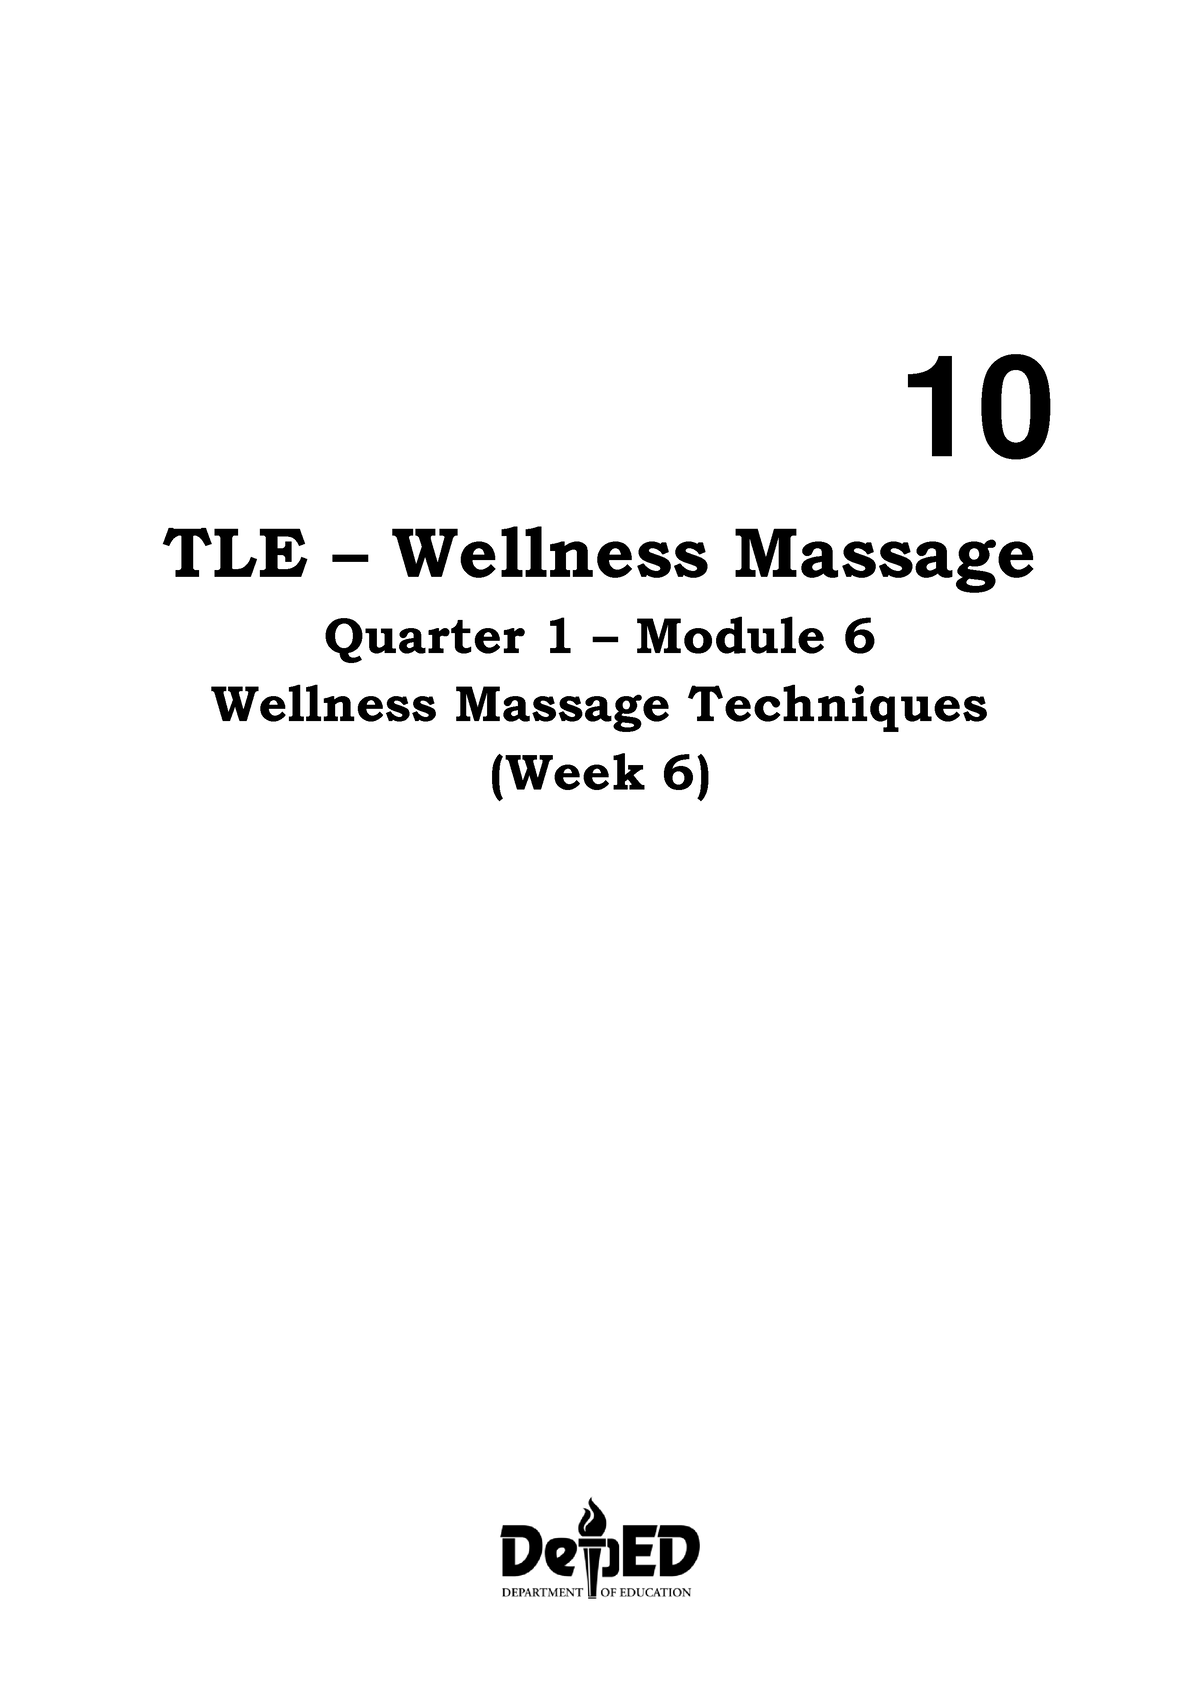 TLE Massage